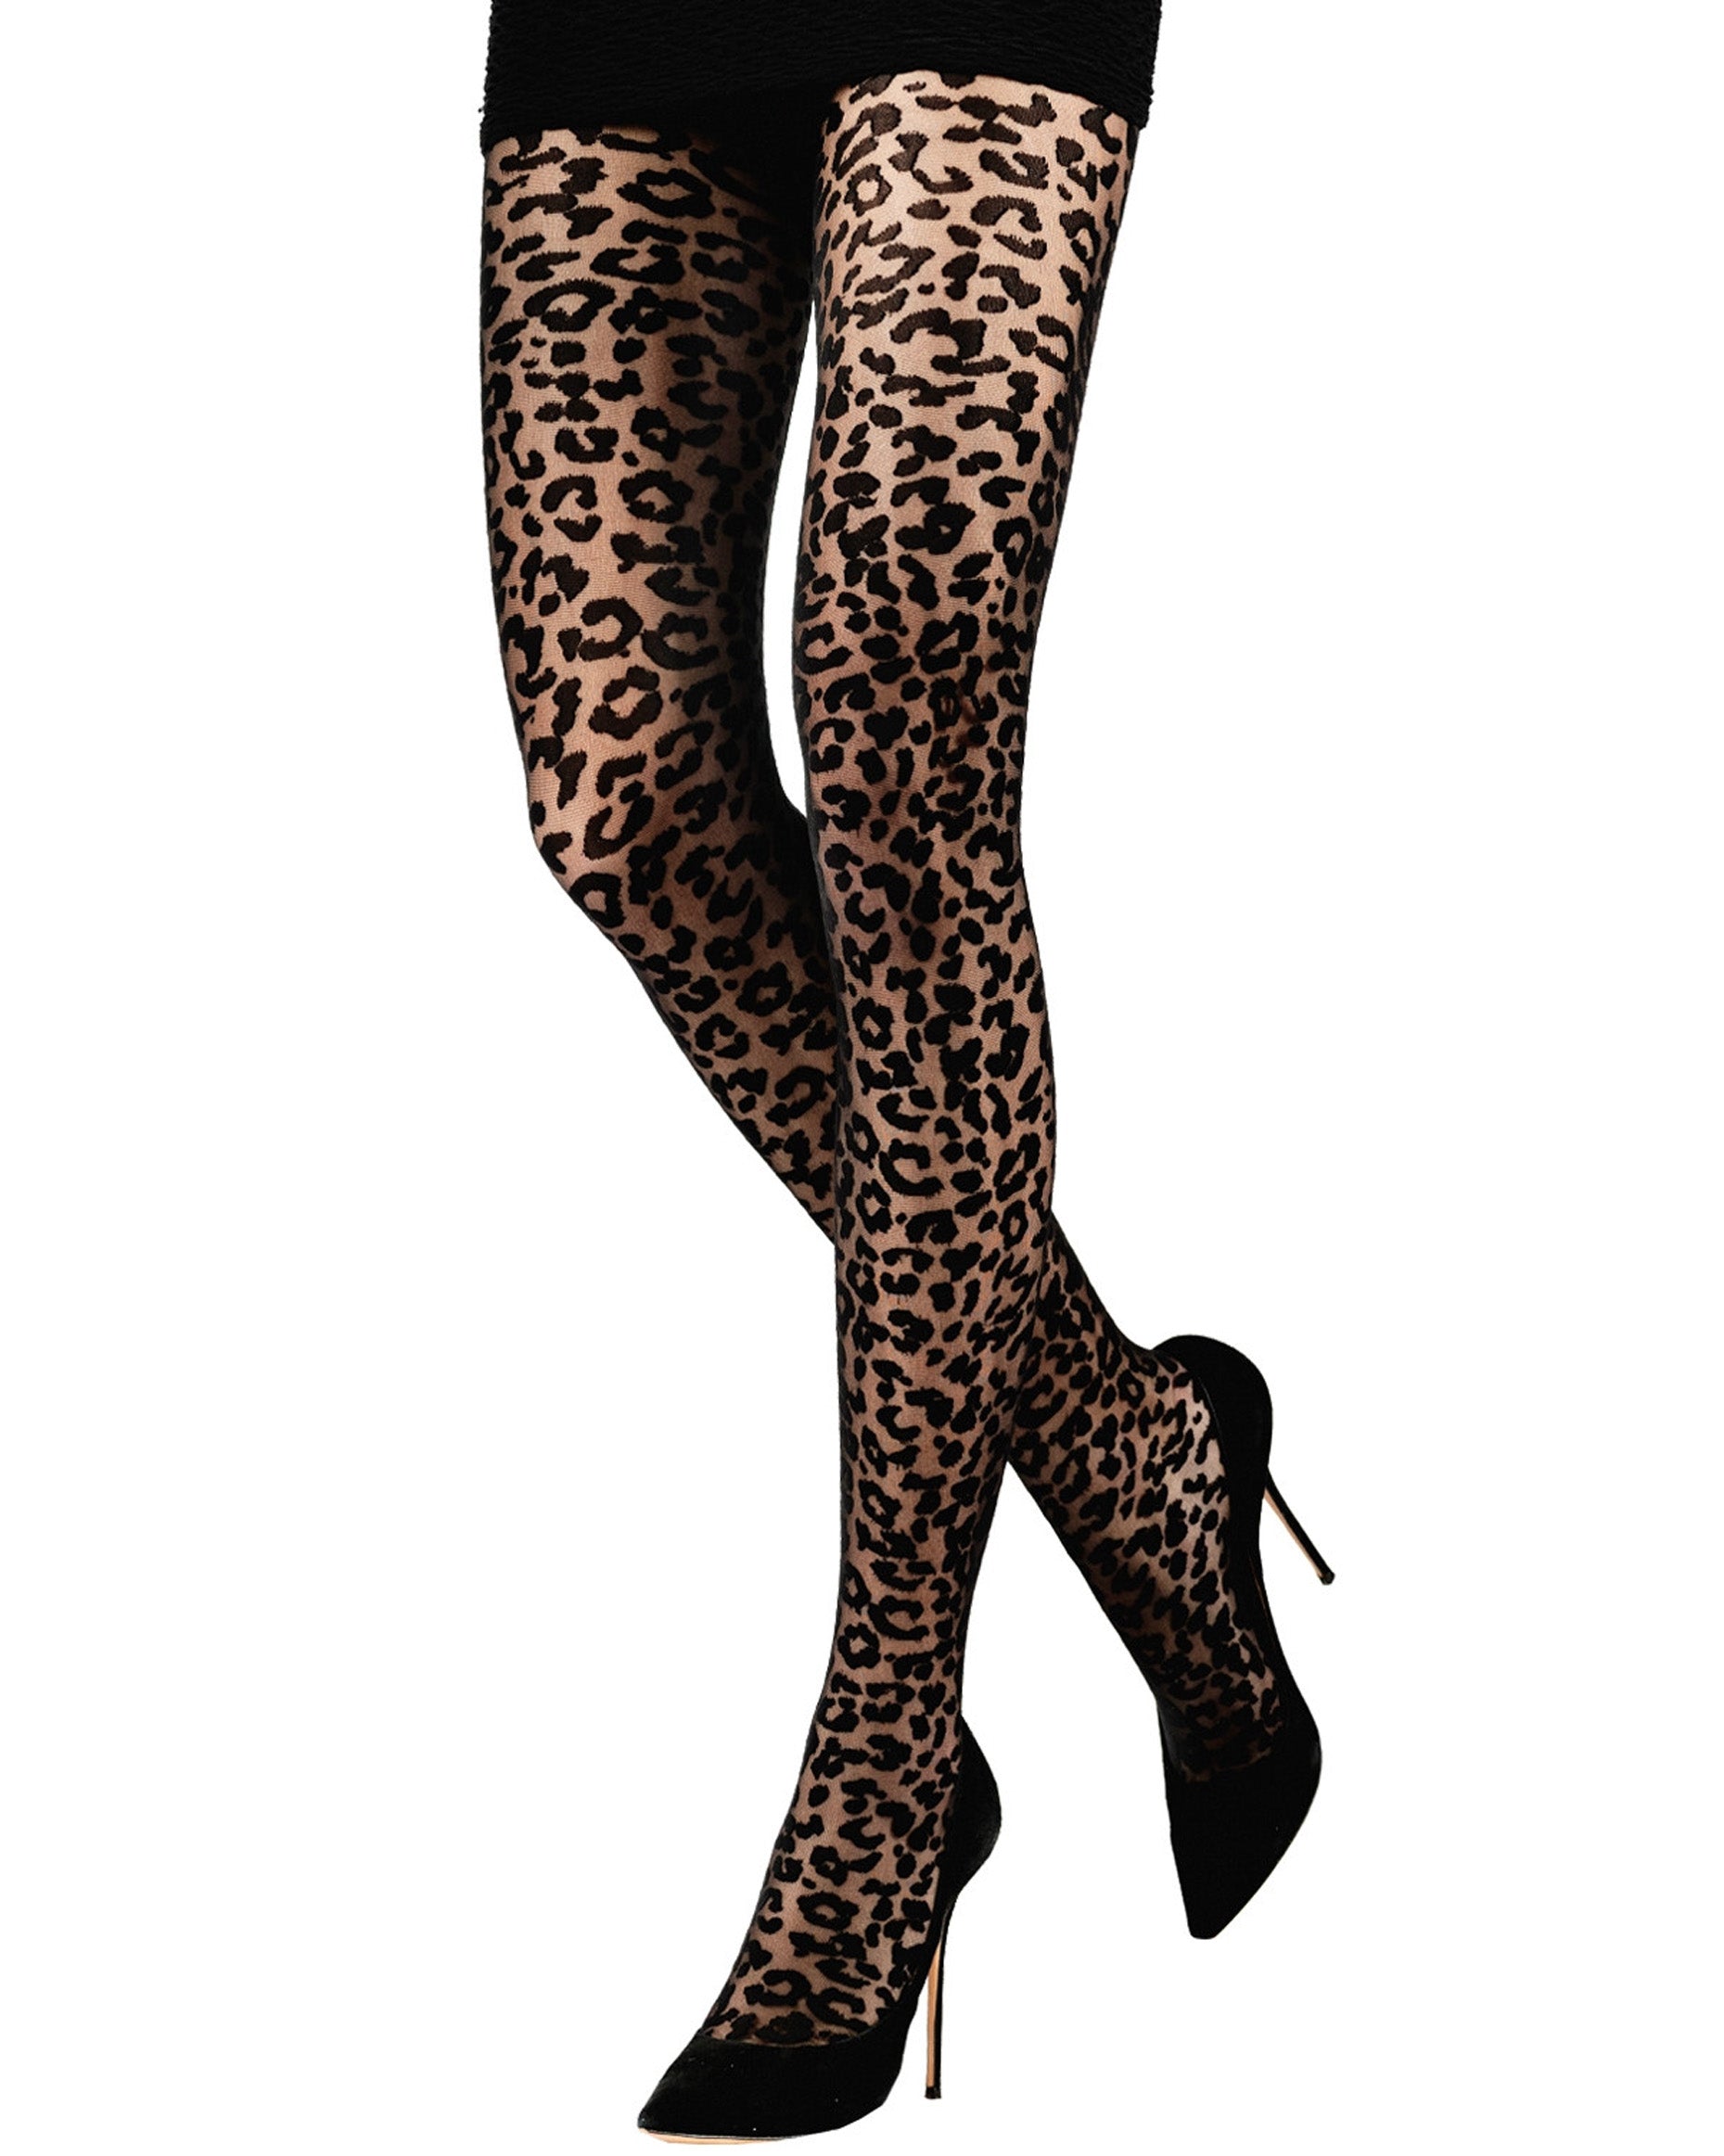 Emilio Cavallini Leopard Tights - sheer black fashion tights with a black opaque animal print pattern, worn with black mini skirt and high heel stilettos